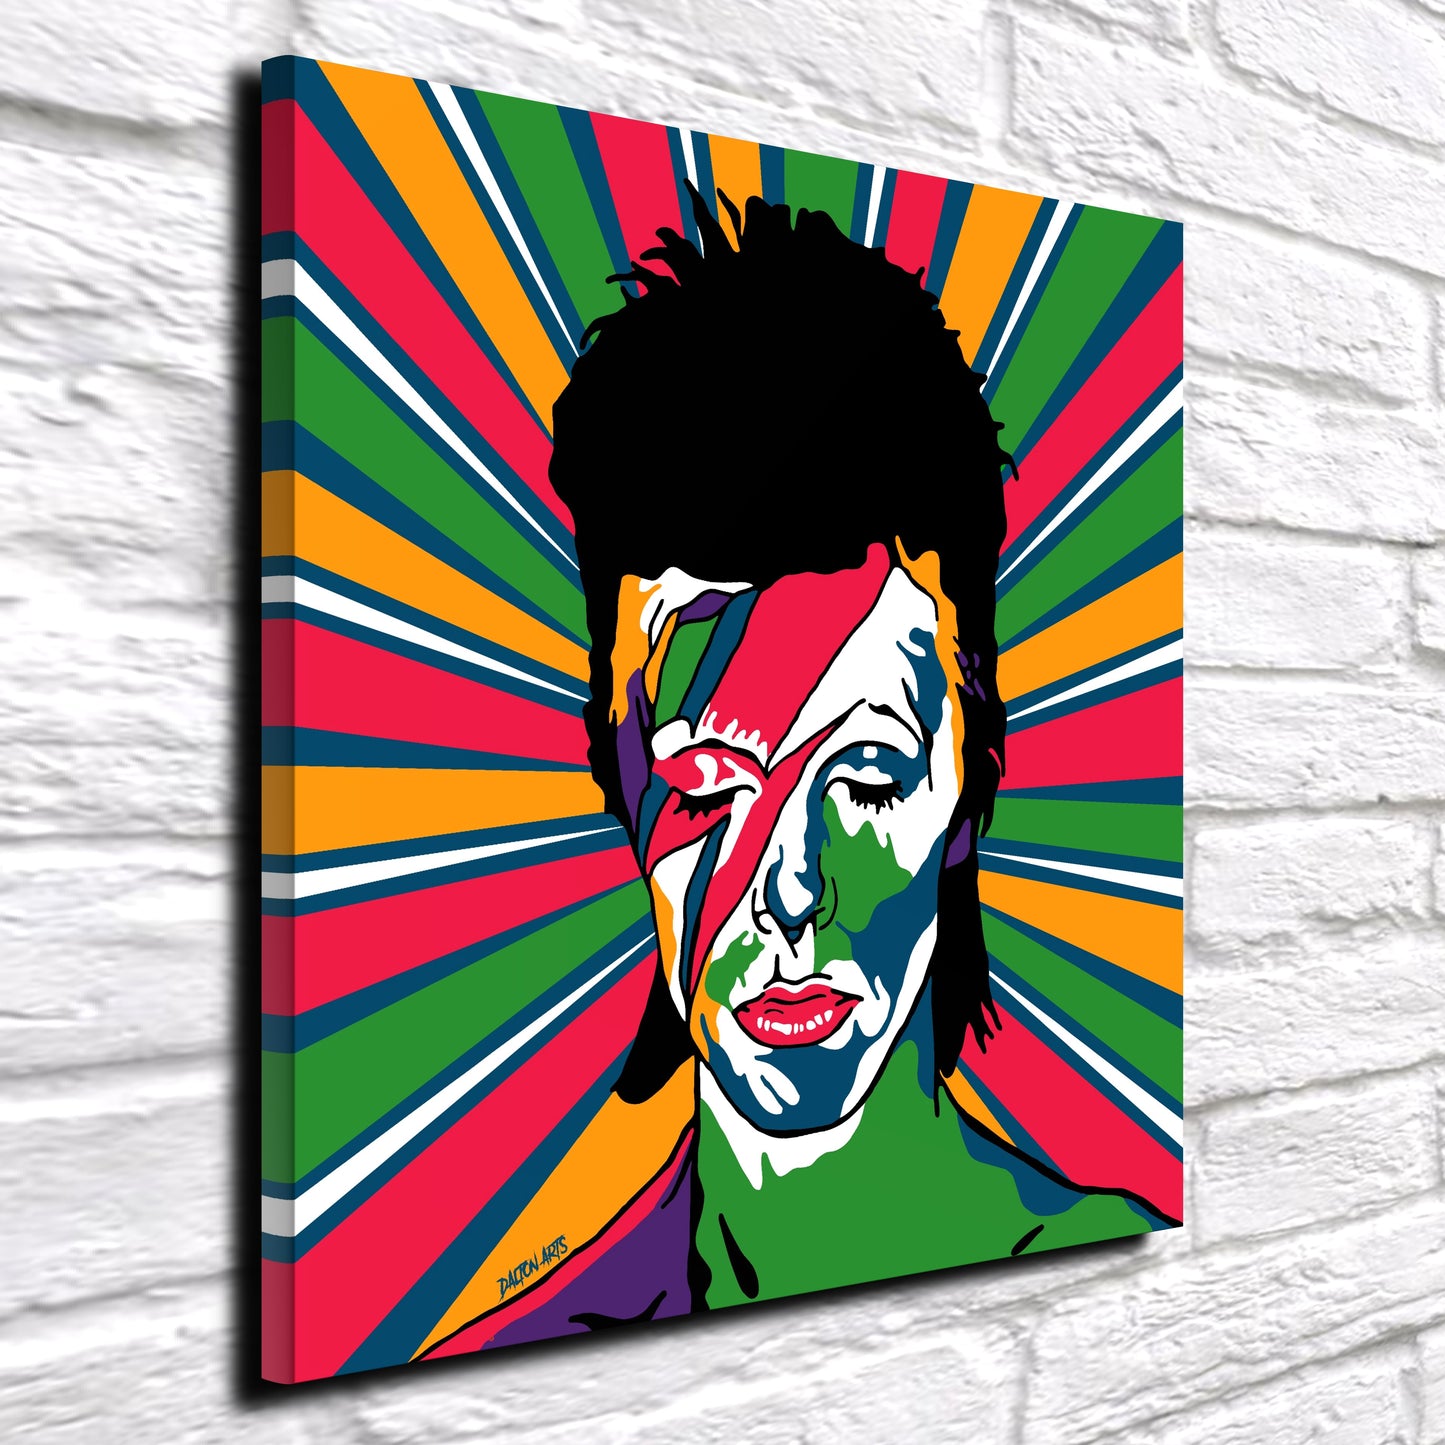 David Bowie Pop Art